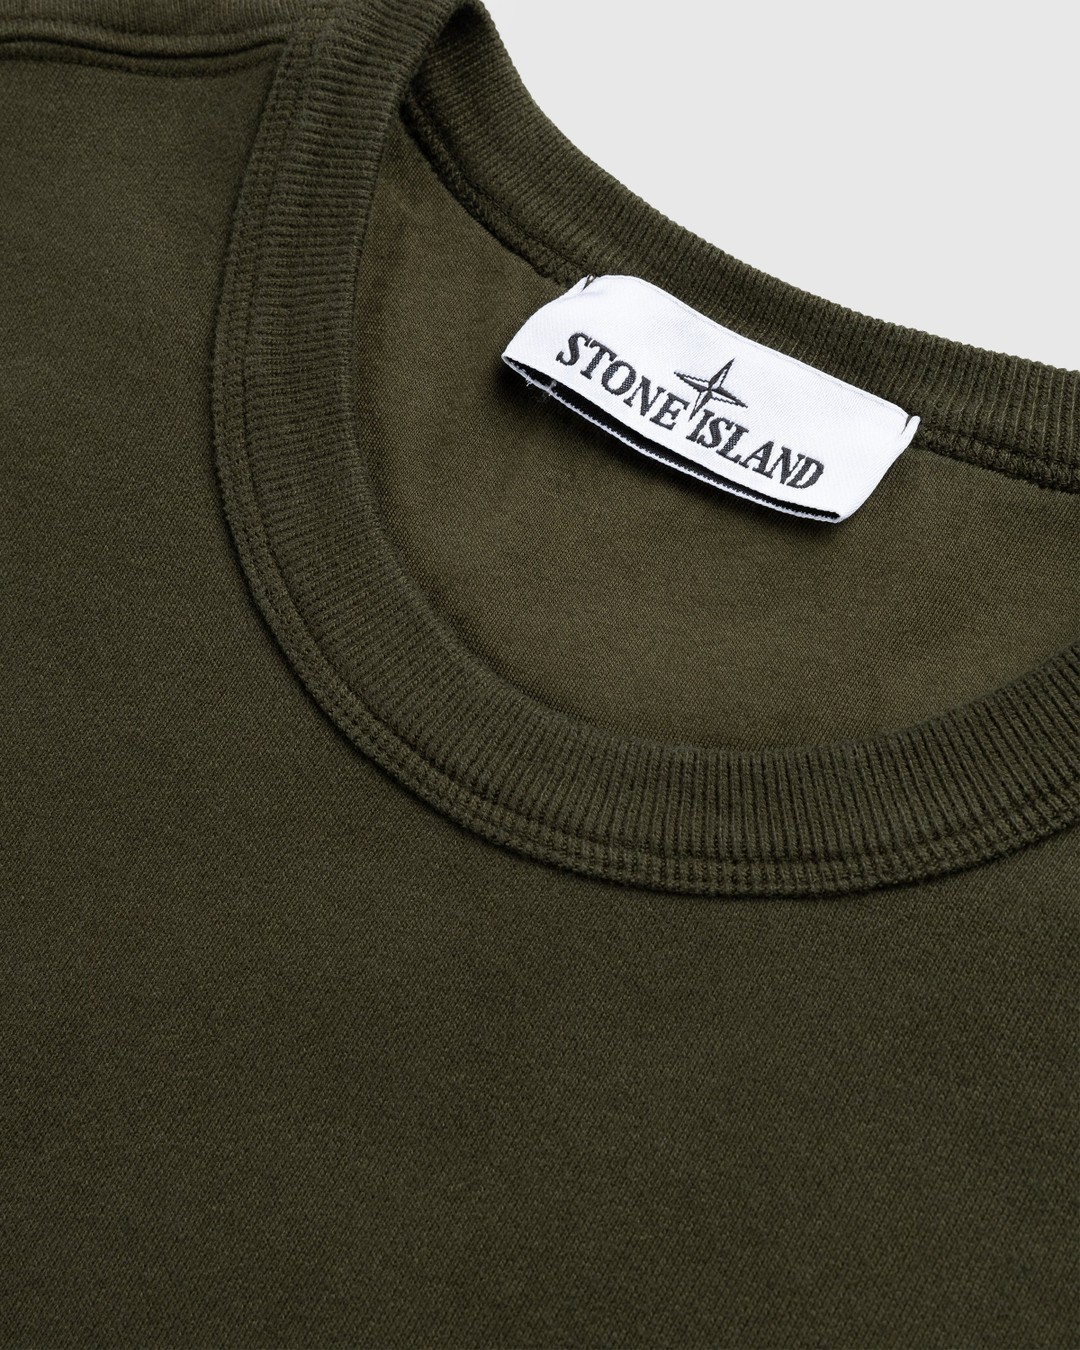 Stone Island – Garment-Dyed Brushed Fleece Crewneck Olive - Knitwear - Green - Image 5